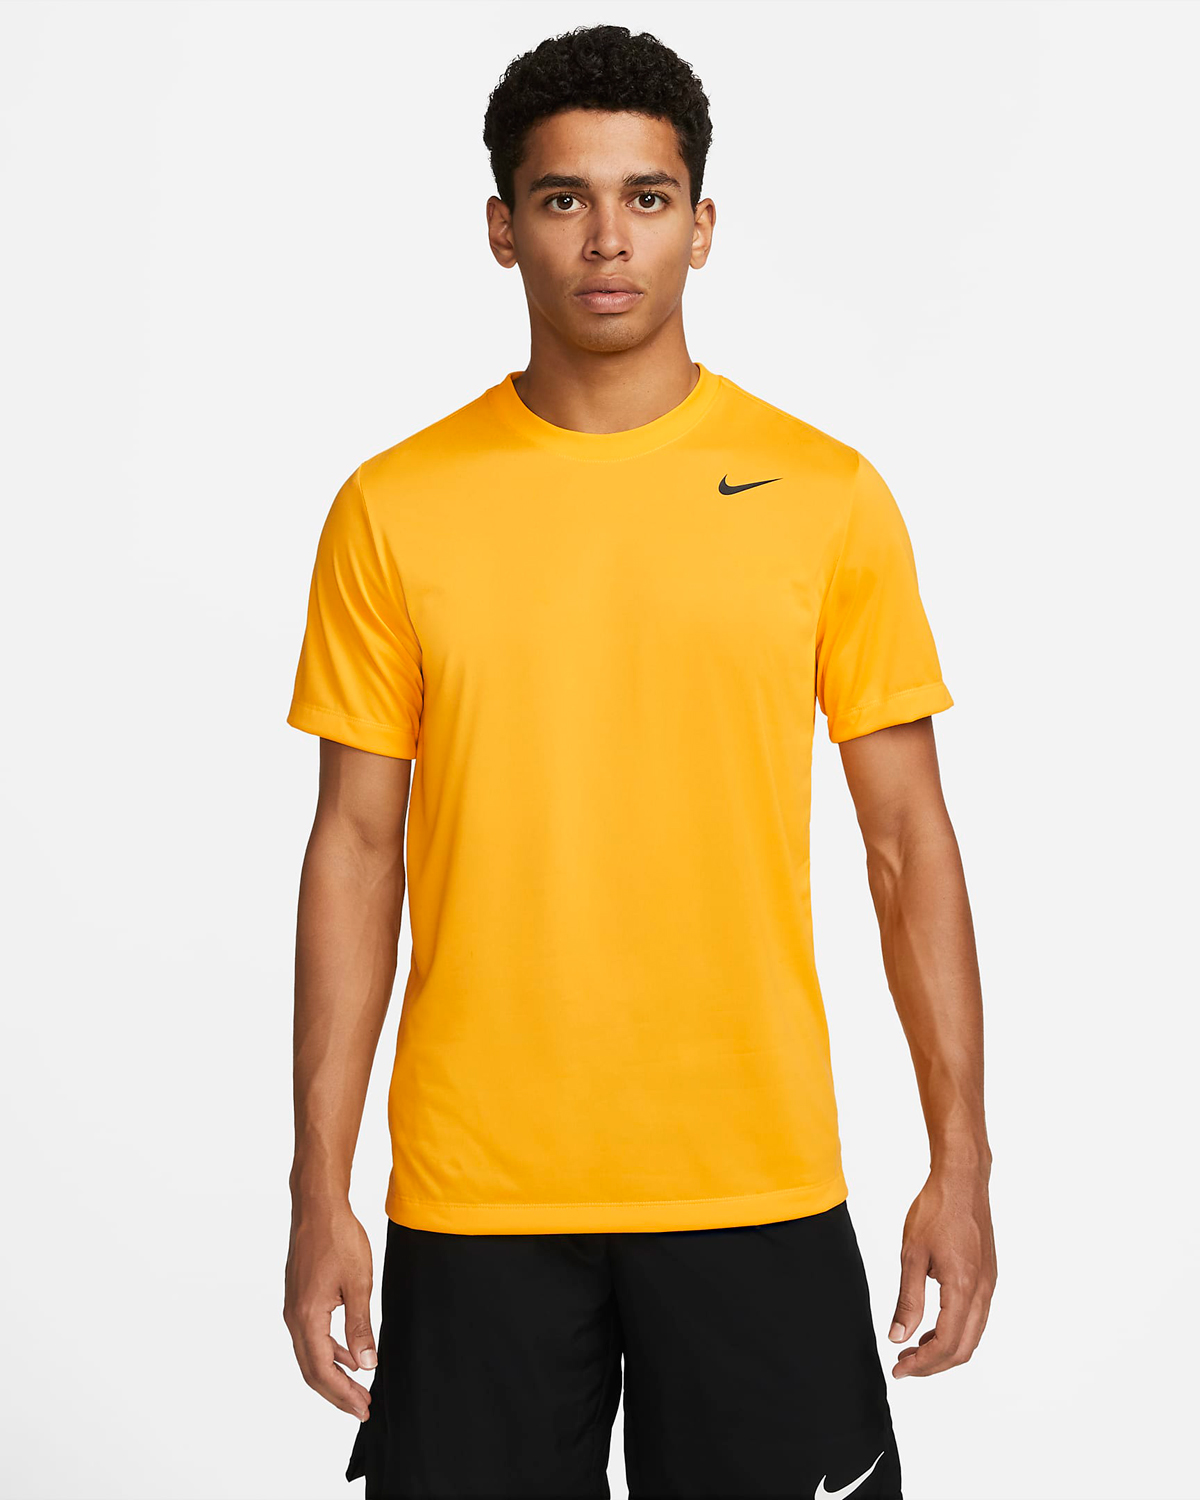 Nike-Dri-Fit-Legend-Shirt-University-Gold